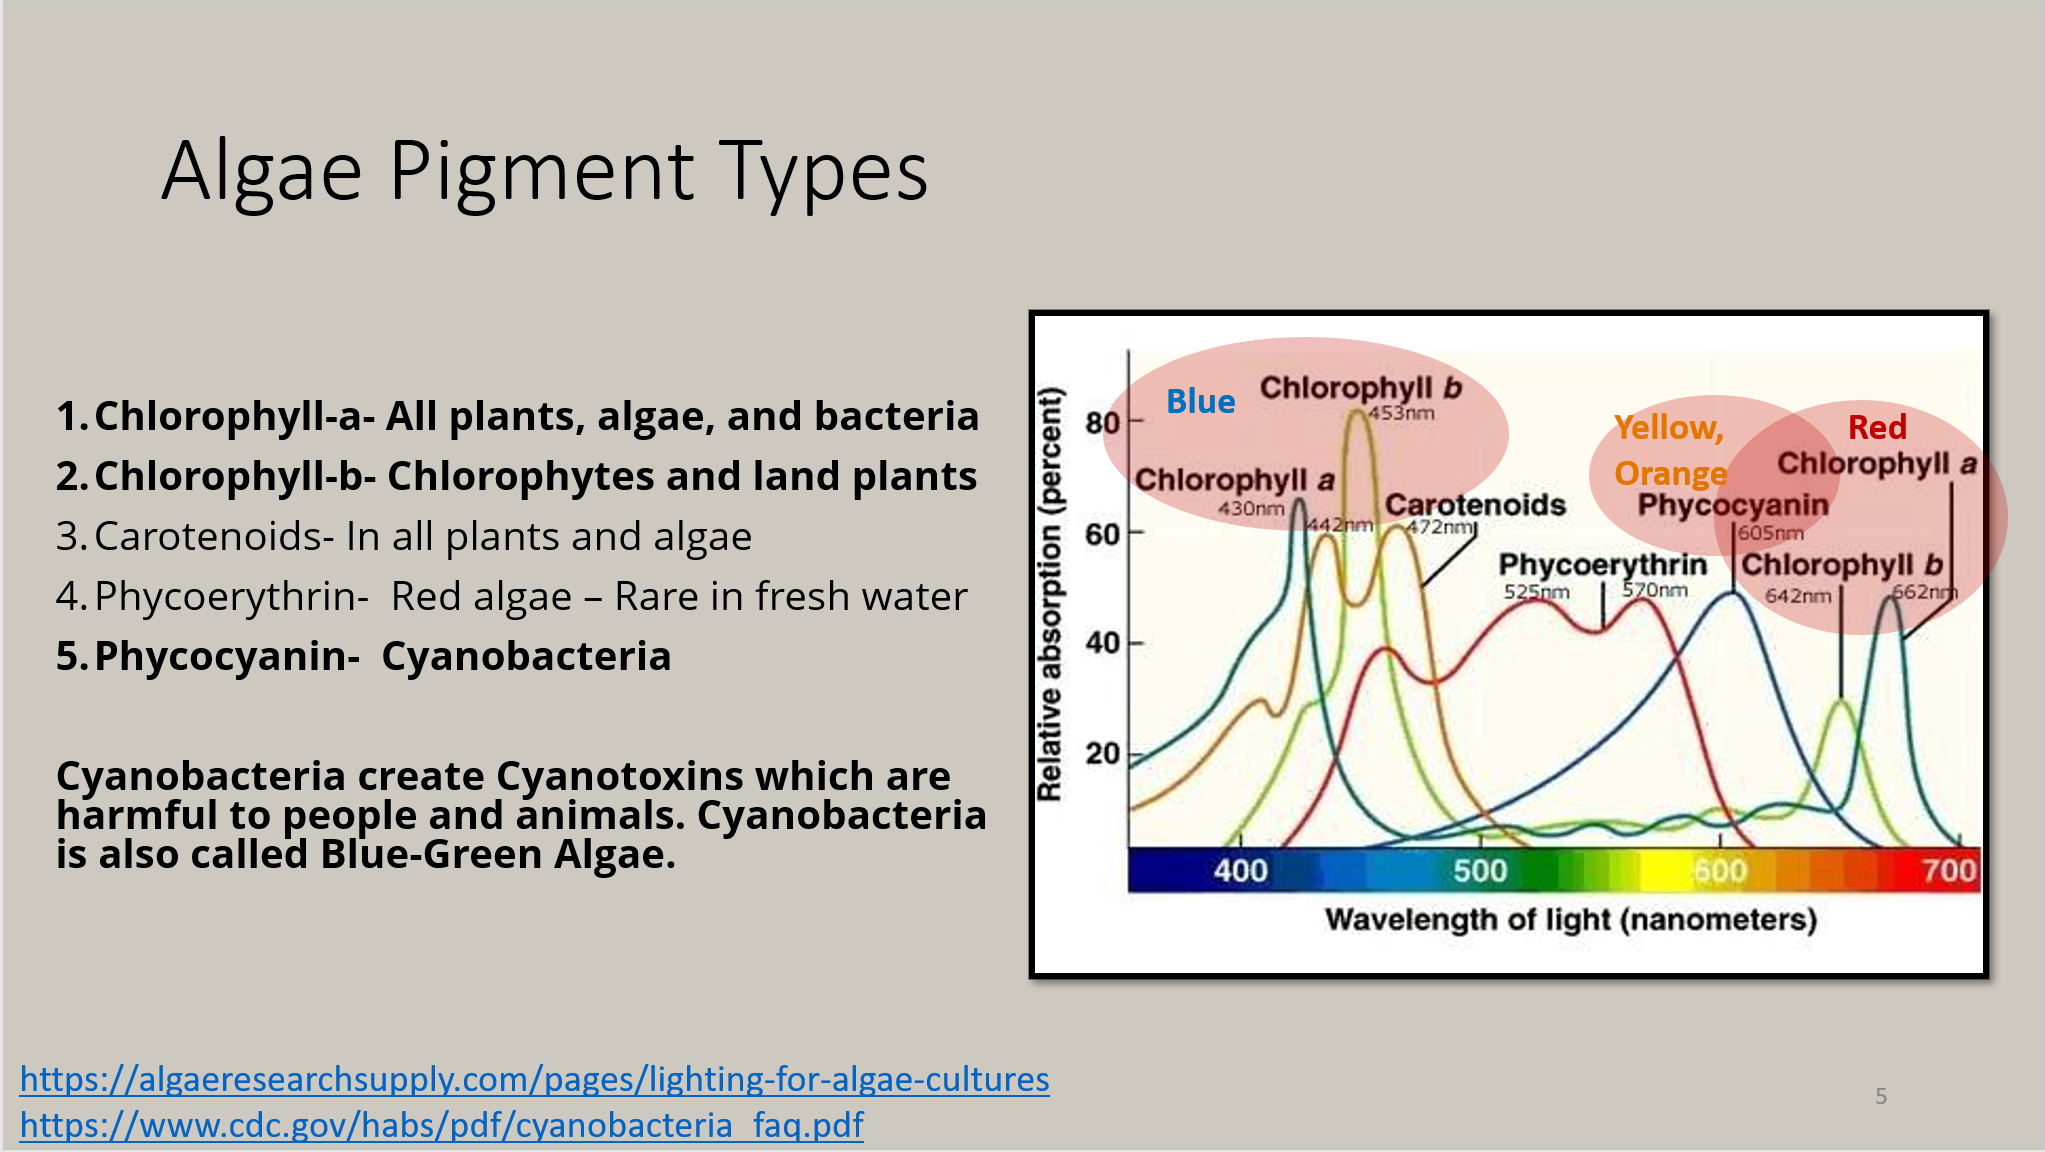 Alge pigment types.PNG